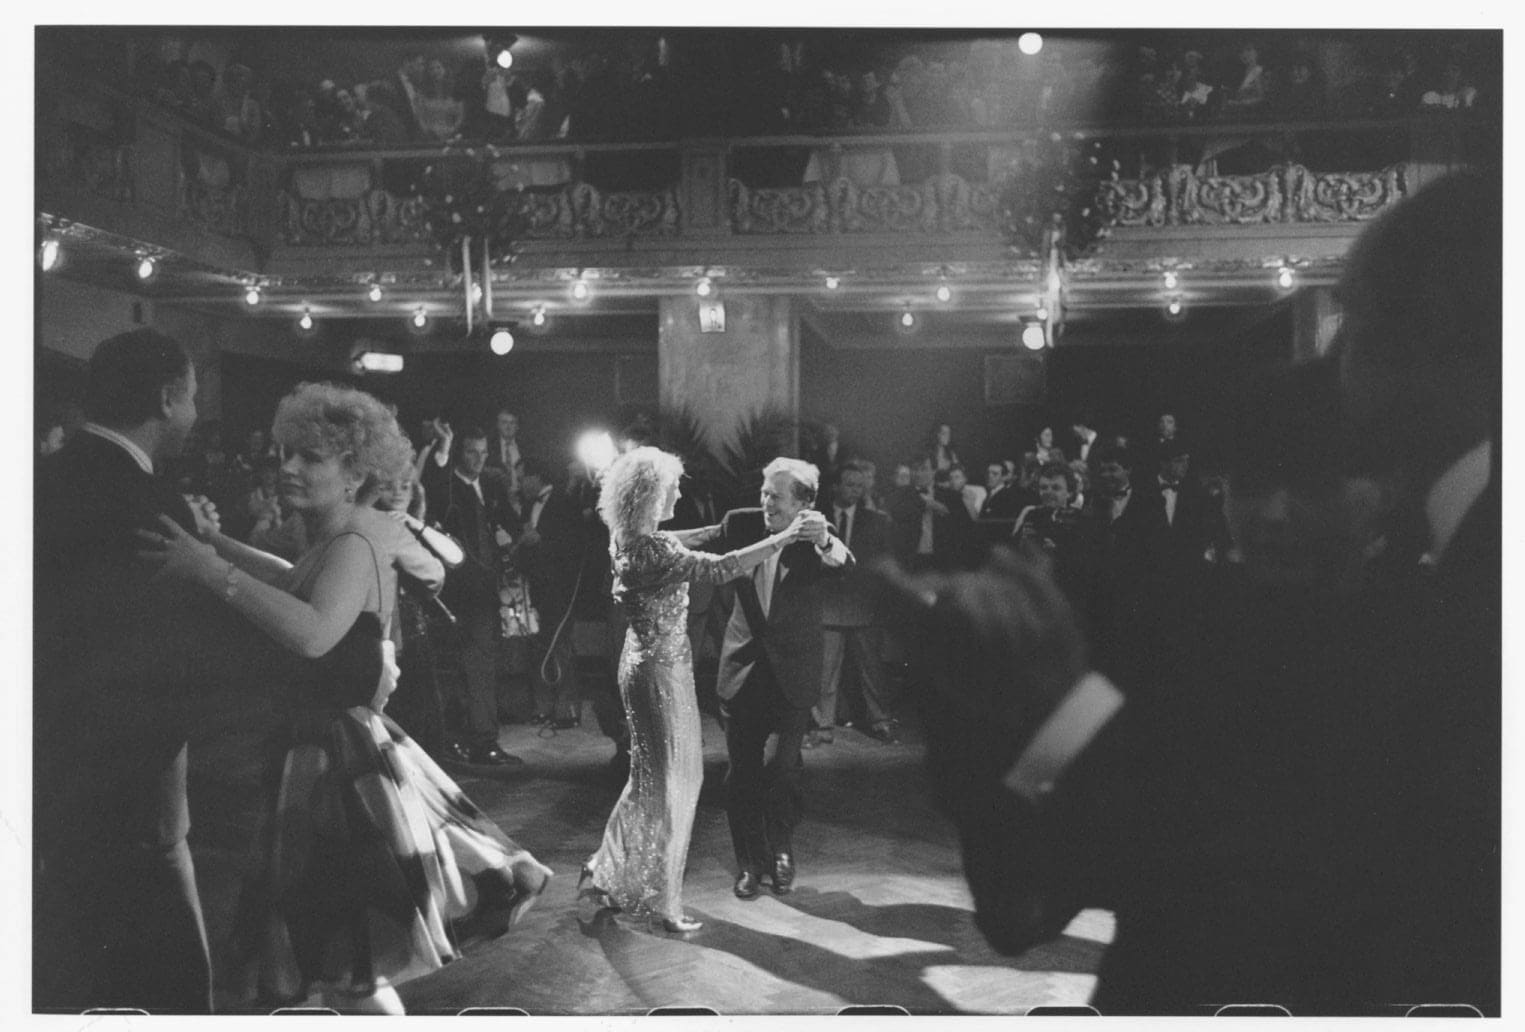 Paul Ickovic, Prague, Czechoslovakia (Vaclav Havel Dancing with Dagman Koeler), 1989